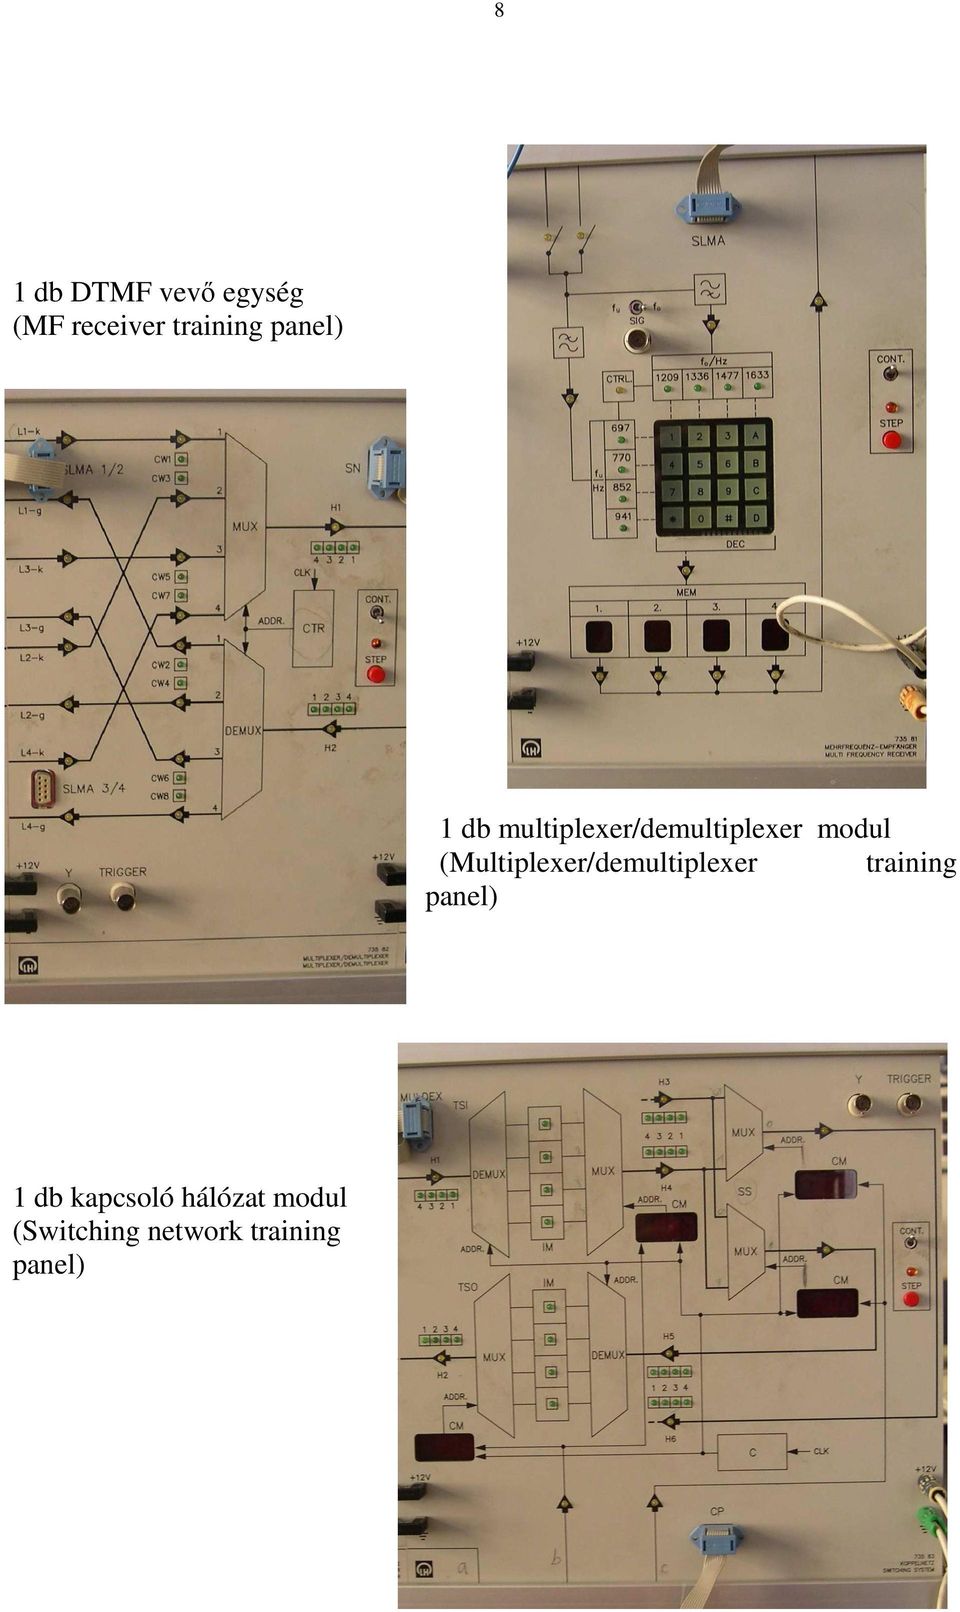 (Multiplexer/demultiplexer training panel) 1 db